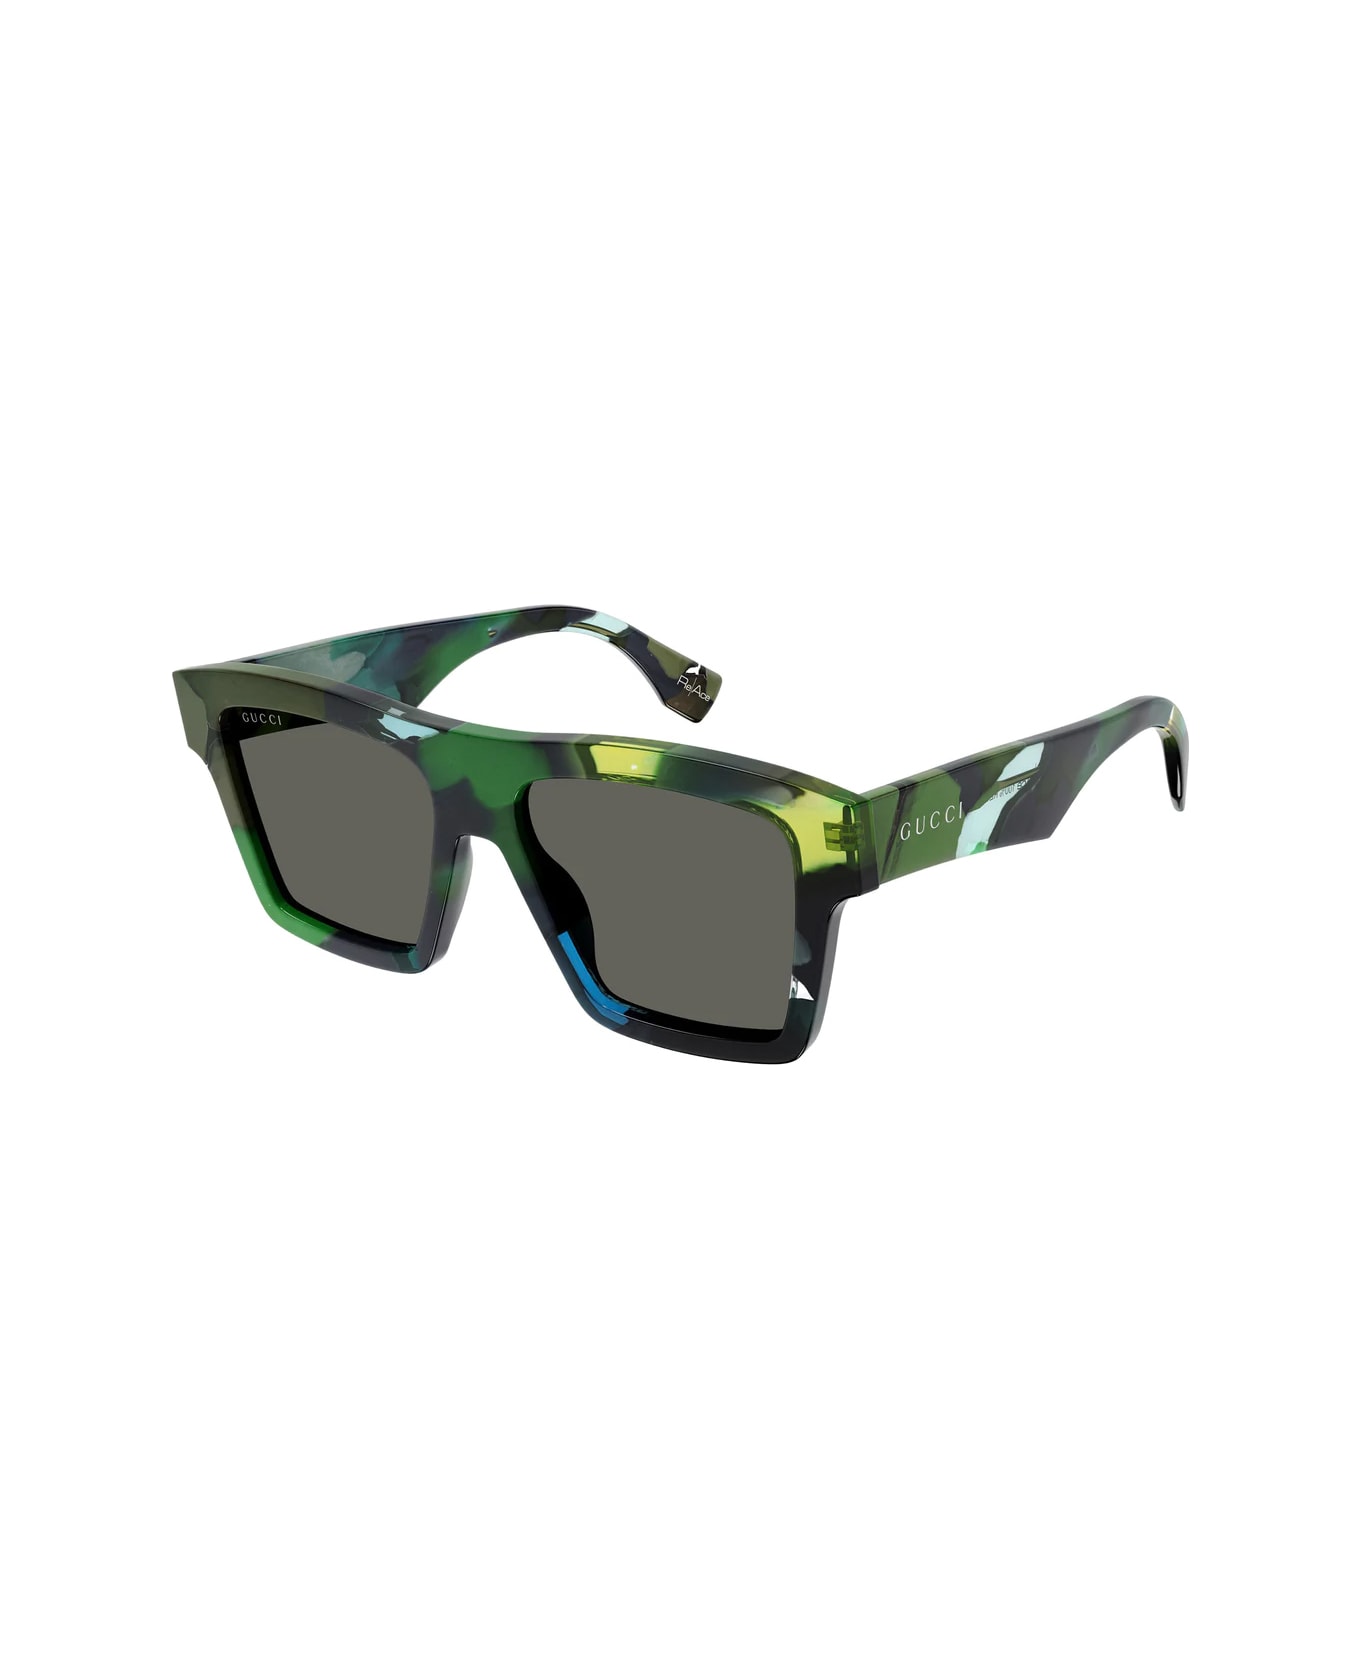 Gucci Eyewear Gg1623s Linea Lettering 001 Sunglasses - Verde